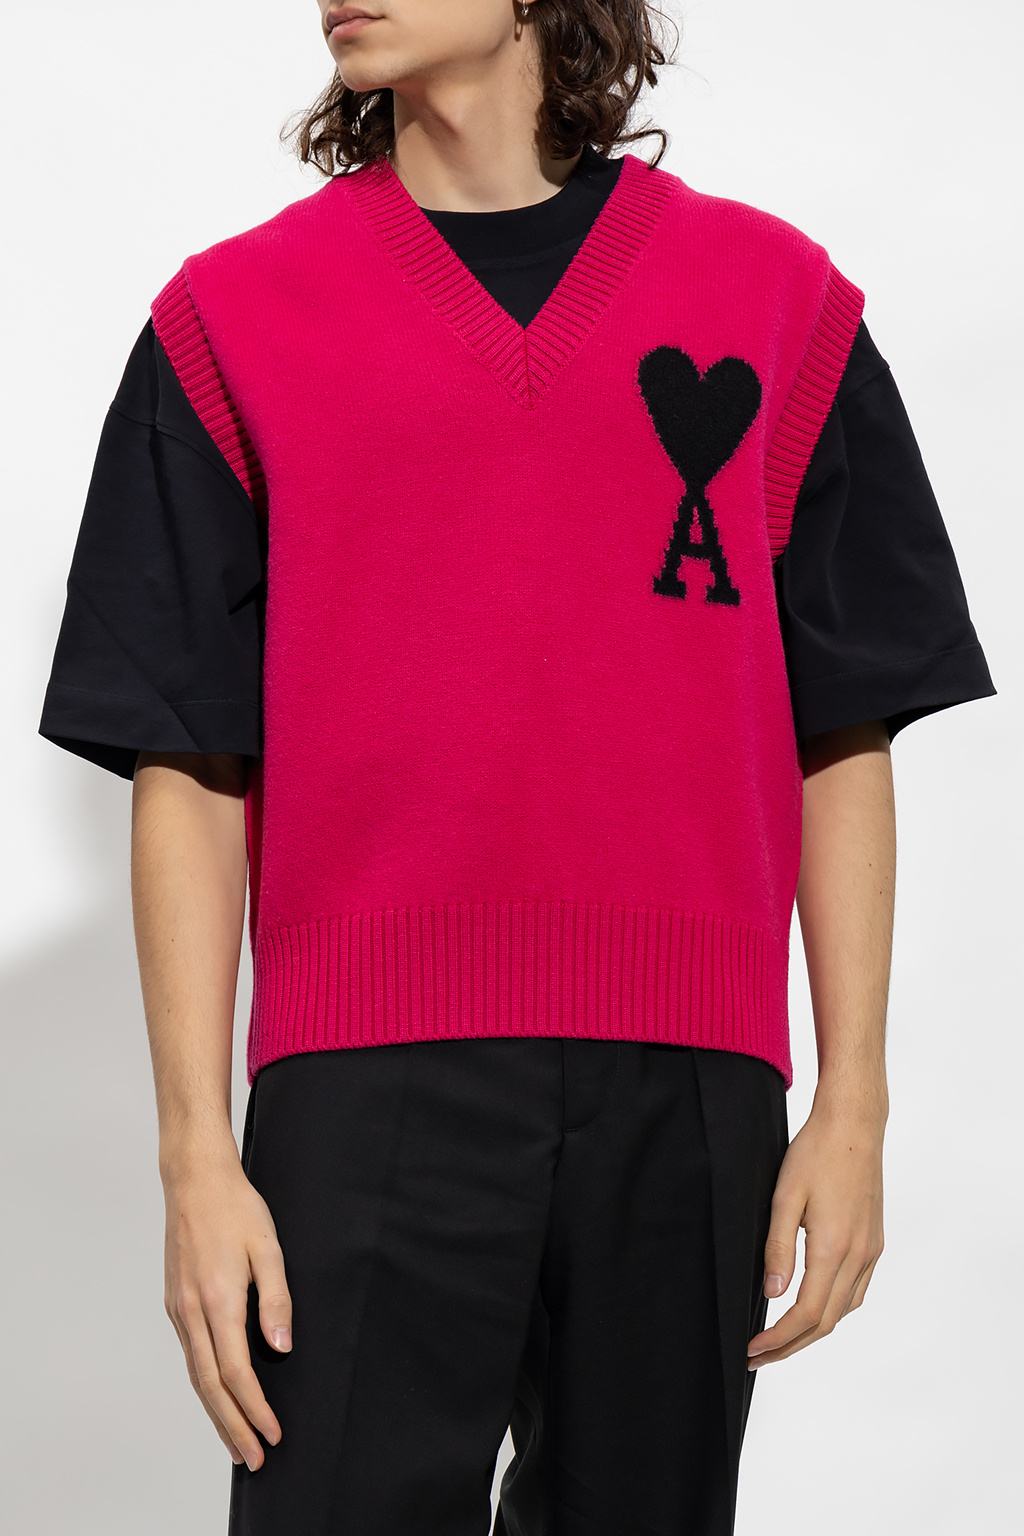 Ami Alexandre Mattiussi T-shirt Nike NK Dry Park 20 vermelho branco infantil